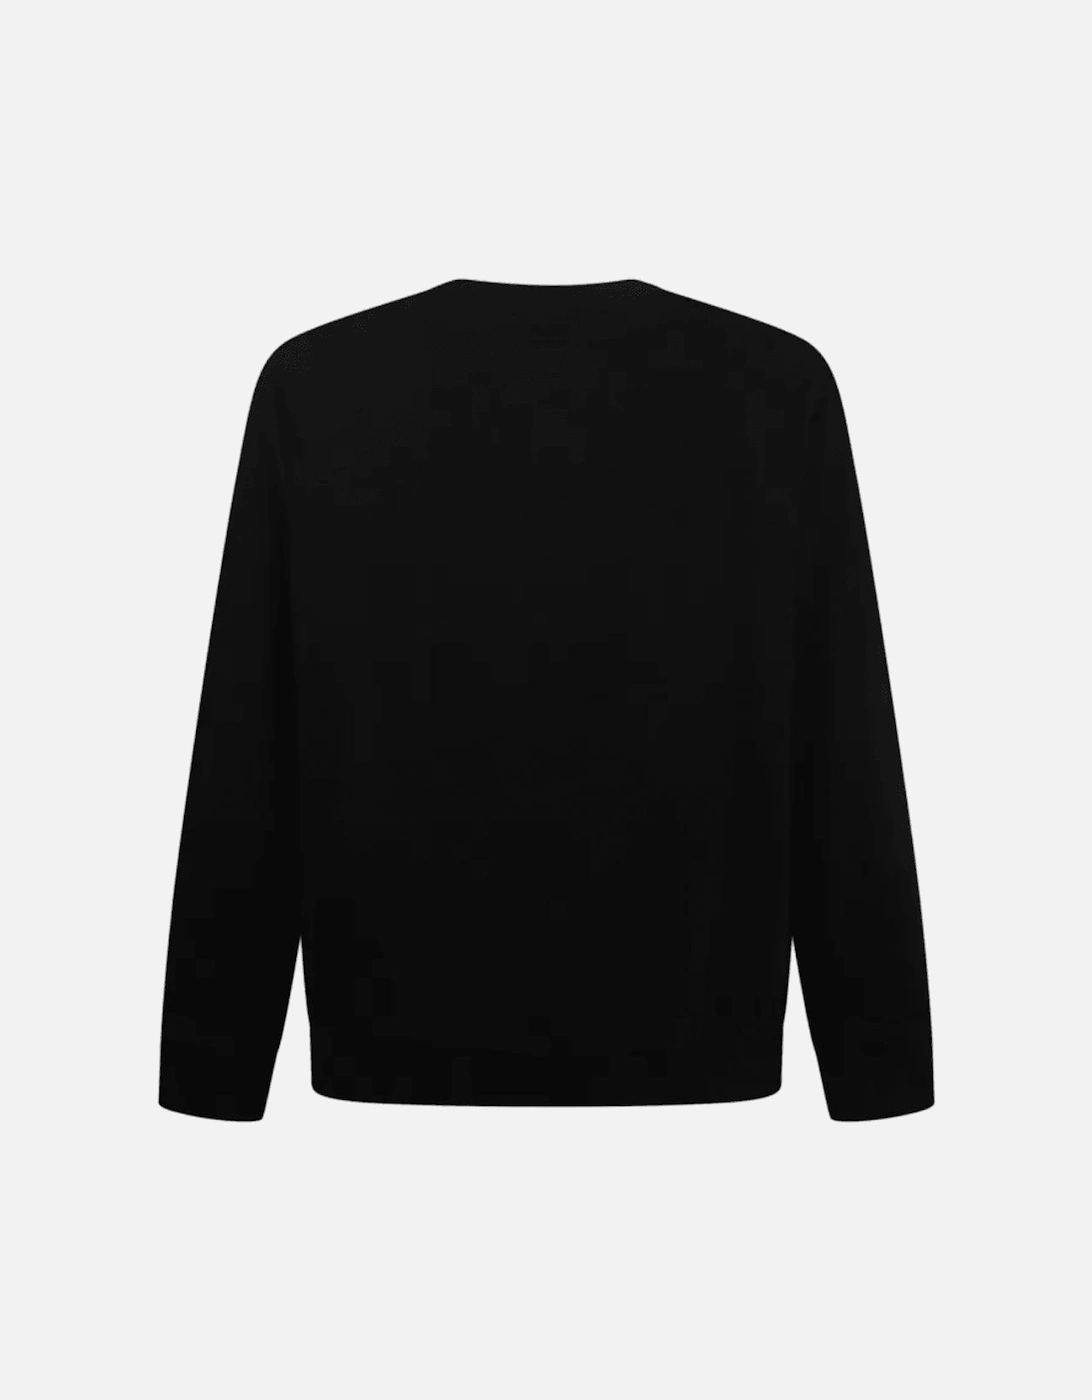 Cotton Print Logo Pullover Black Sweatshirt